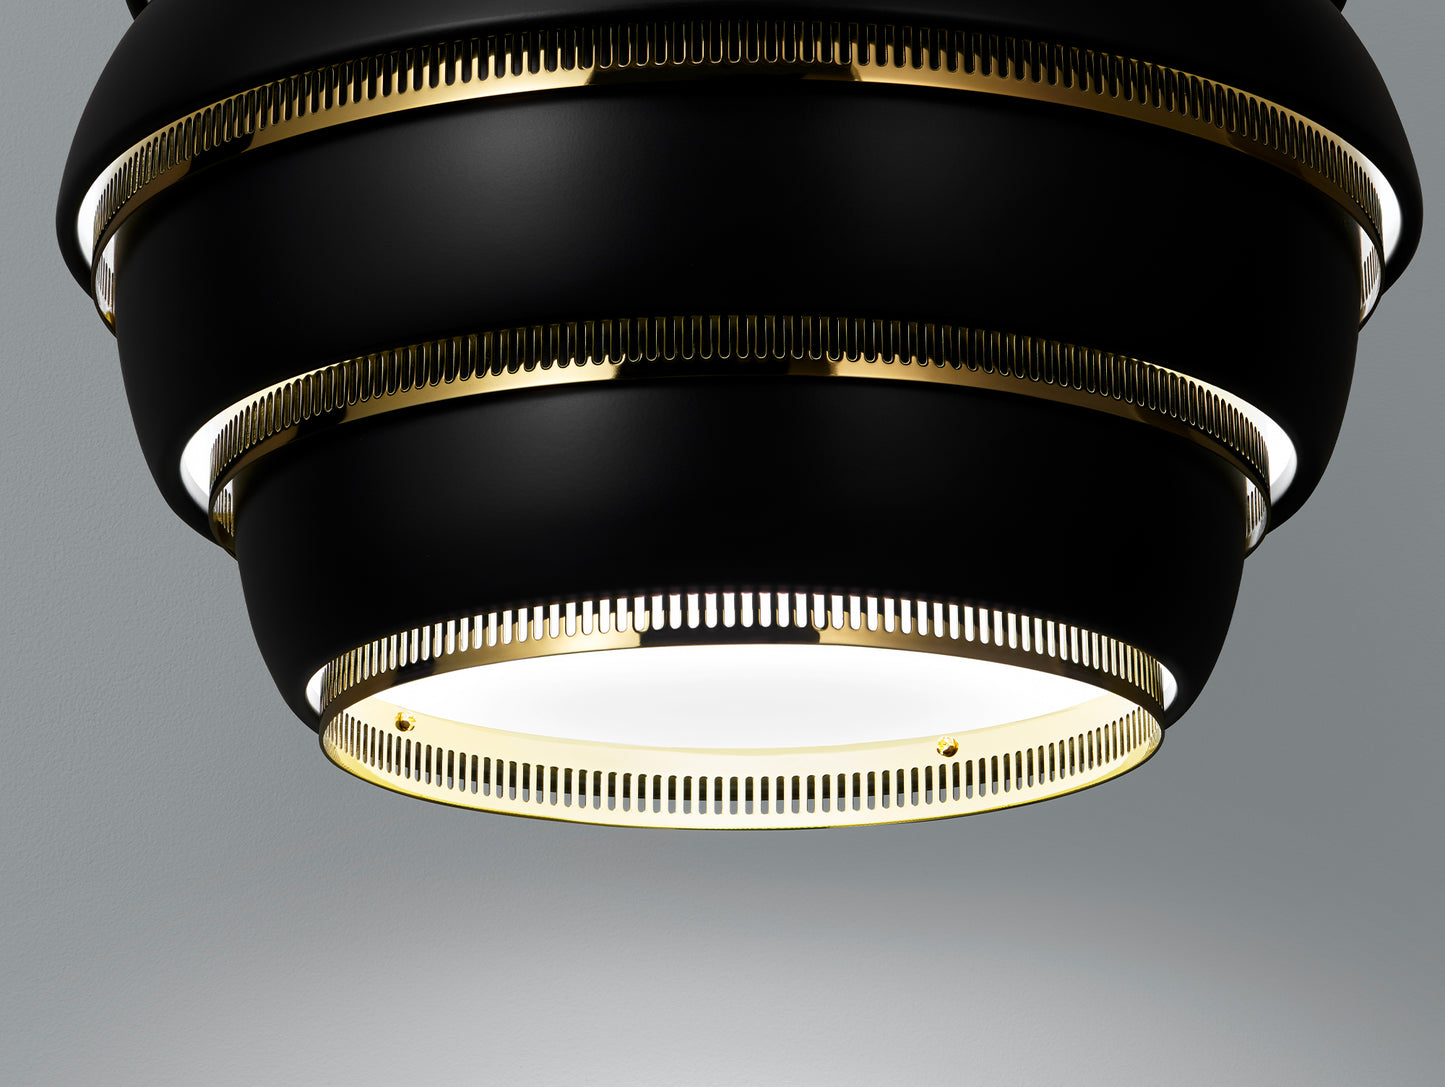 A331 Beehive Pendant Light by Artek - Black Aluminium Shade with Brass Rings